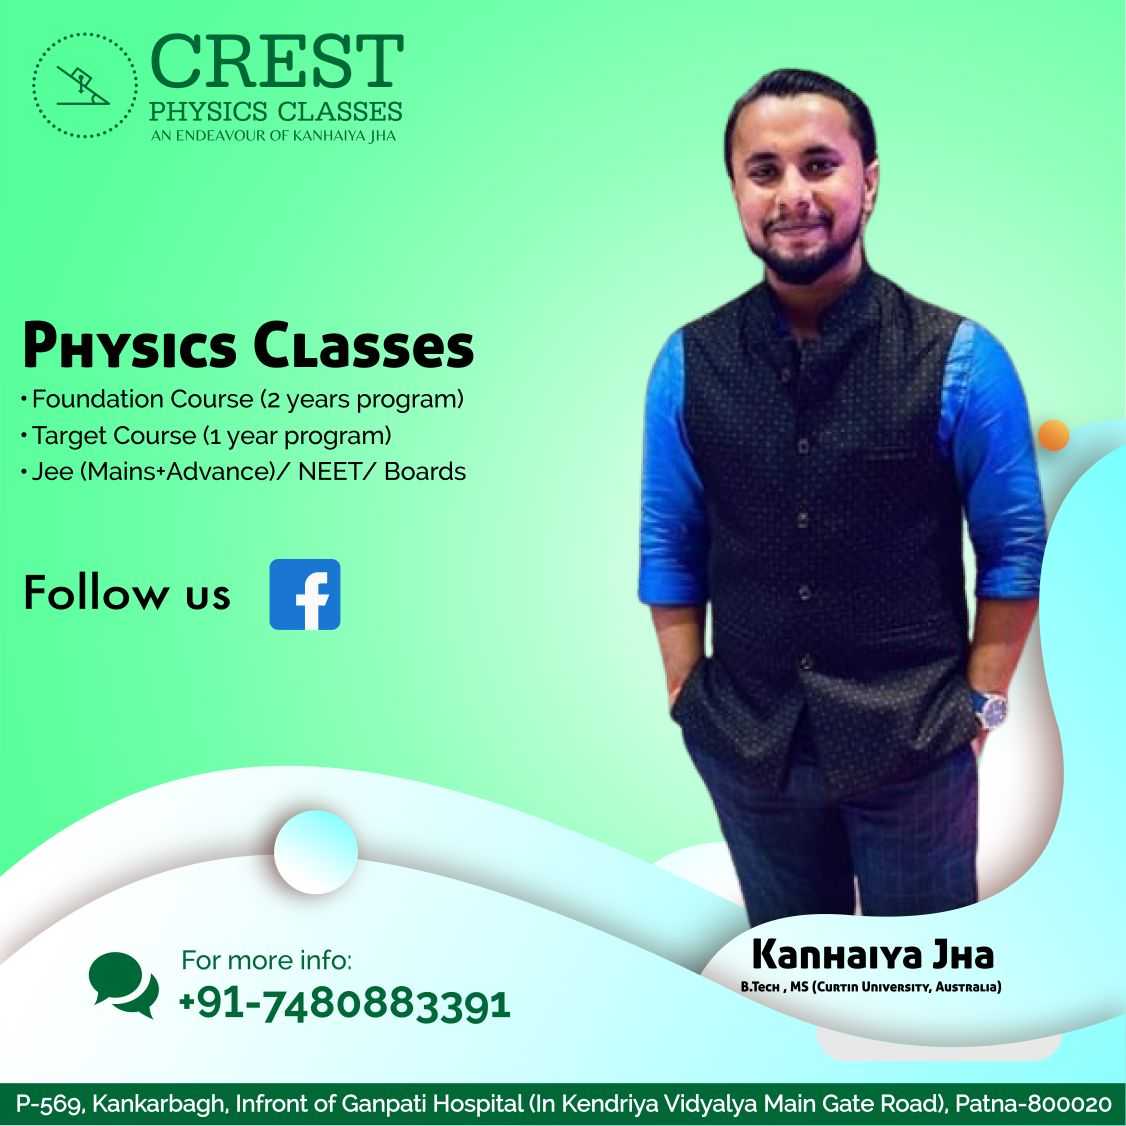 CREST PHYSICS CLASSES; Online Classes; Teach Online; Online Teaching; Virtual Classroom